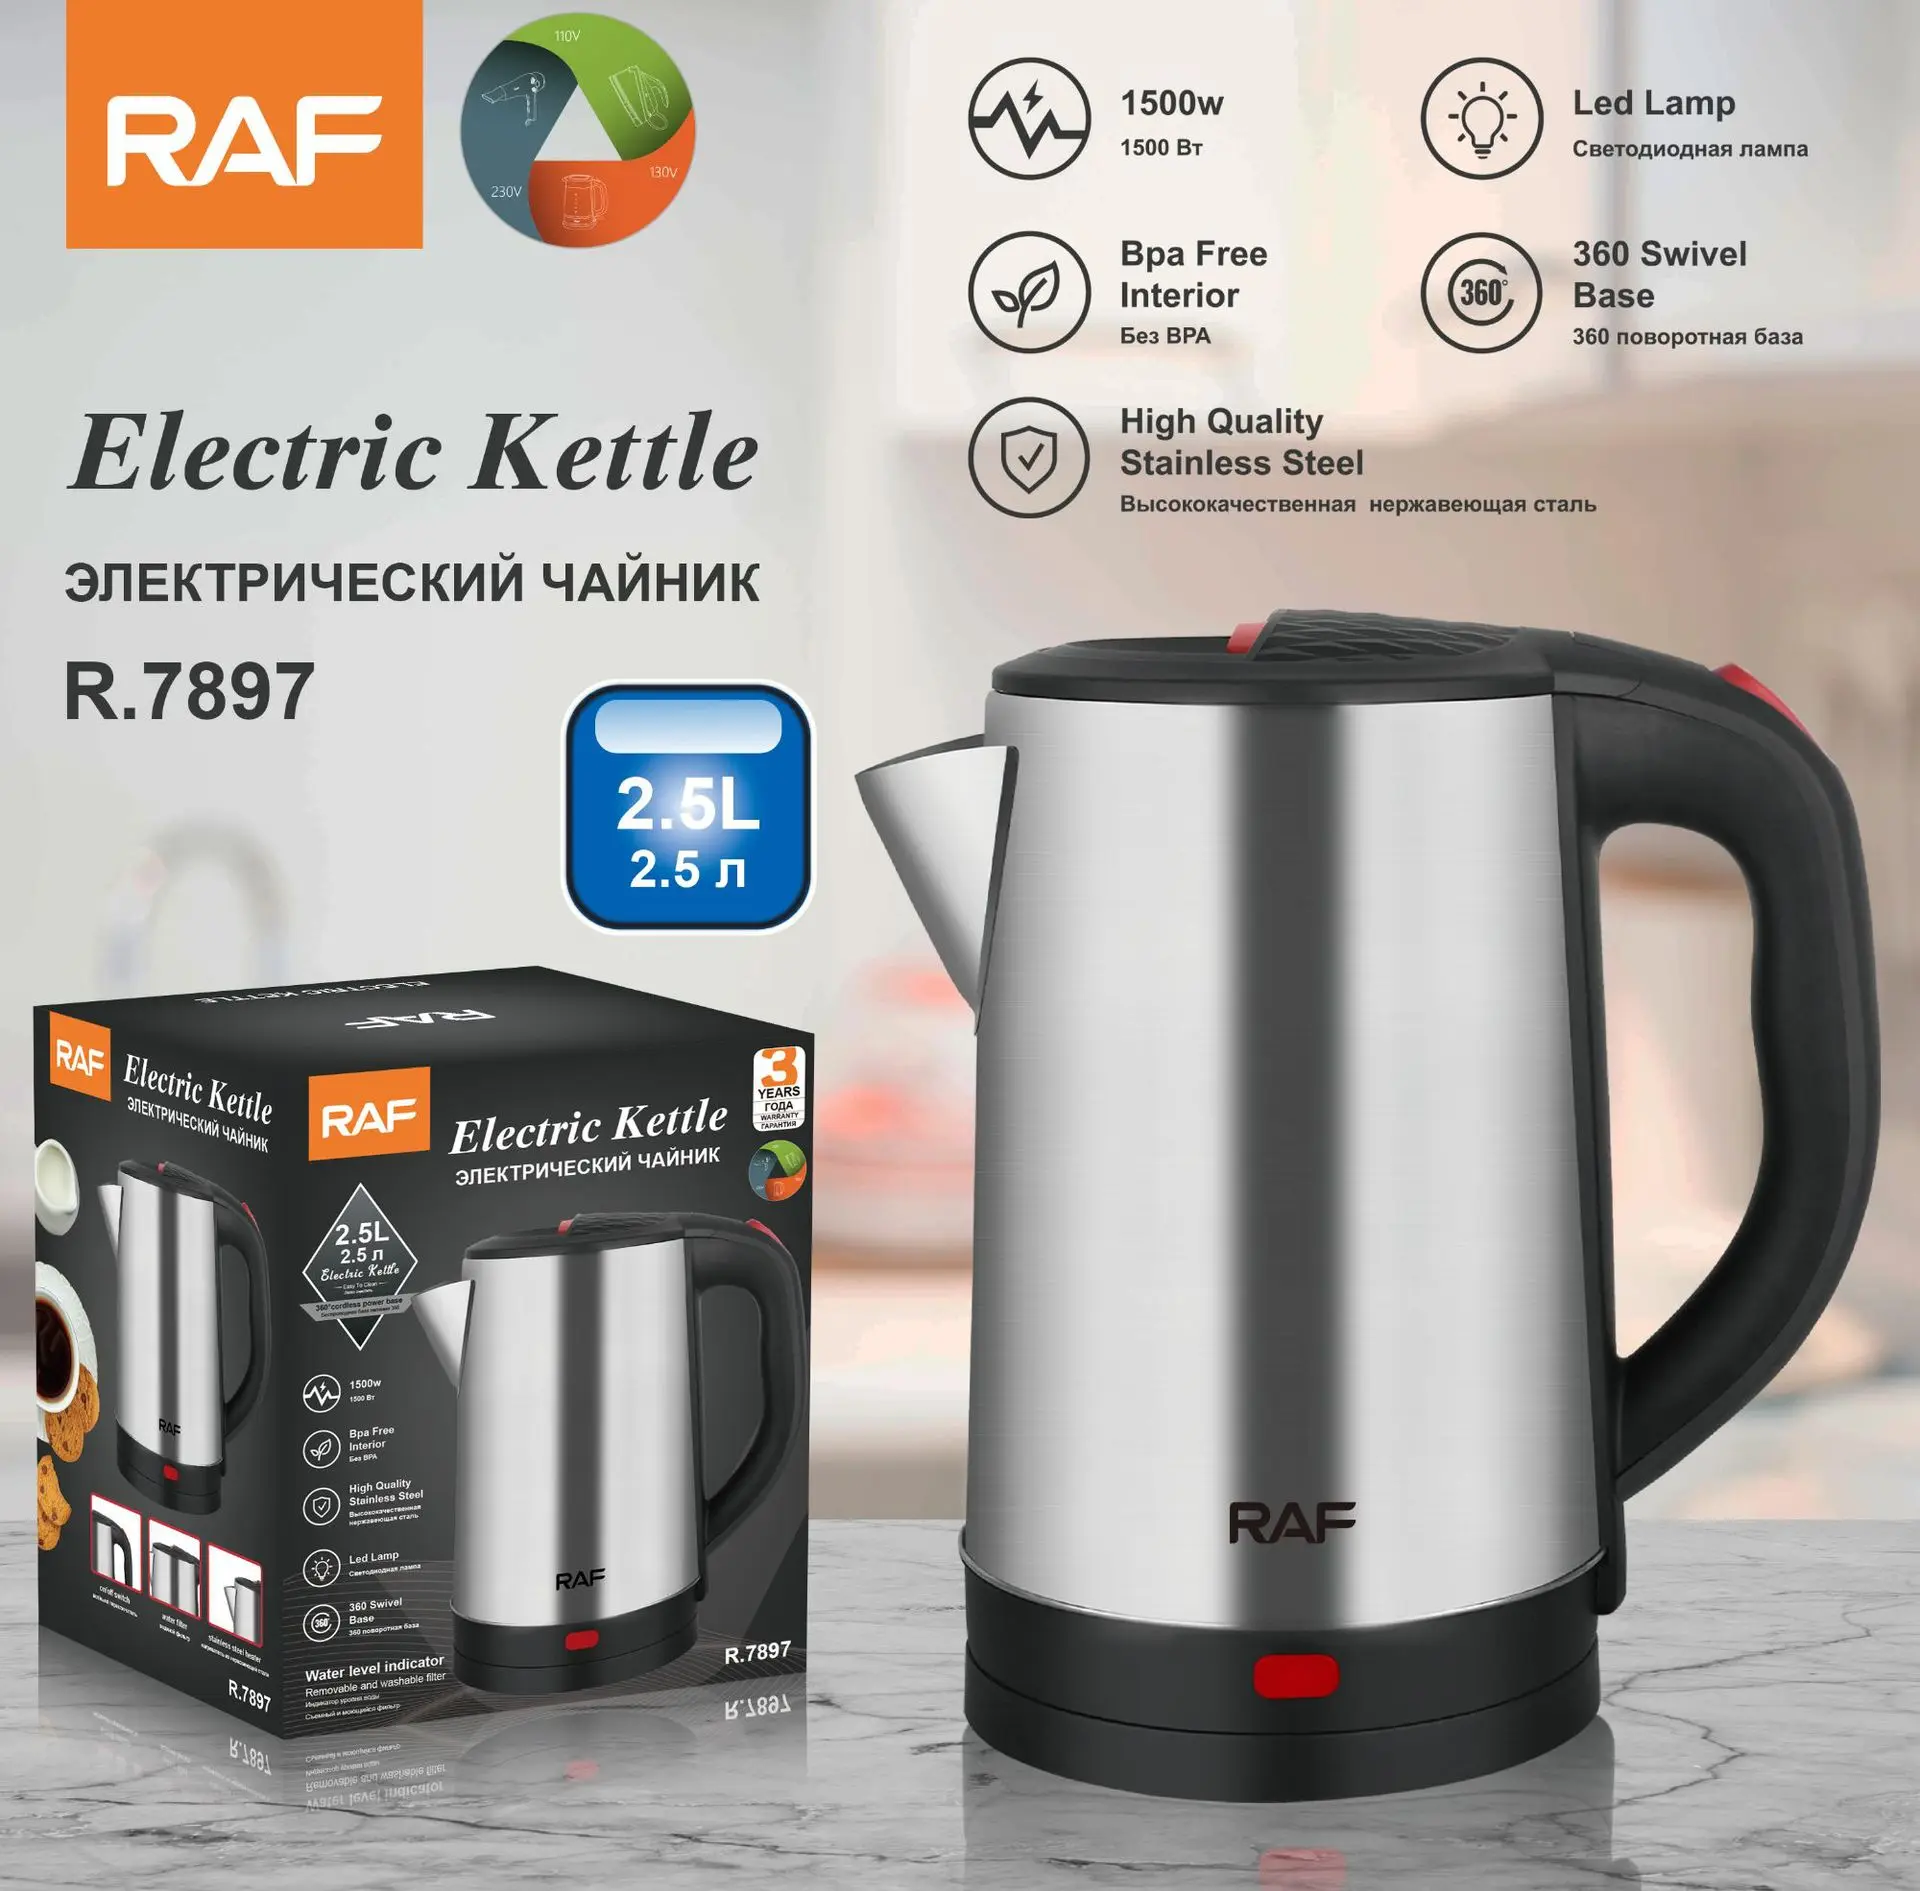 https://ae01.alicdn.com/kf/Sb547fb0db42149f5a2b6fe0127c9eb4aK/Electric-Tea-Kettle-Stainless-Steel-2-5-Liter-Instant-Hot-Water-Boiler-Heater-Cordless-Kettle-Fast.jpg